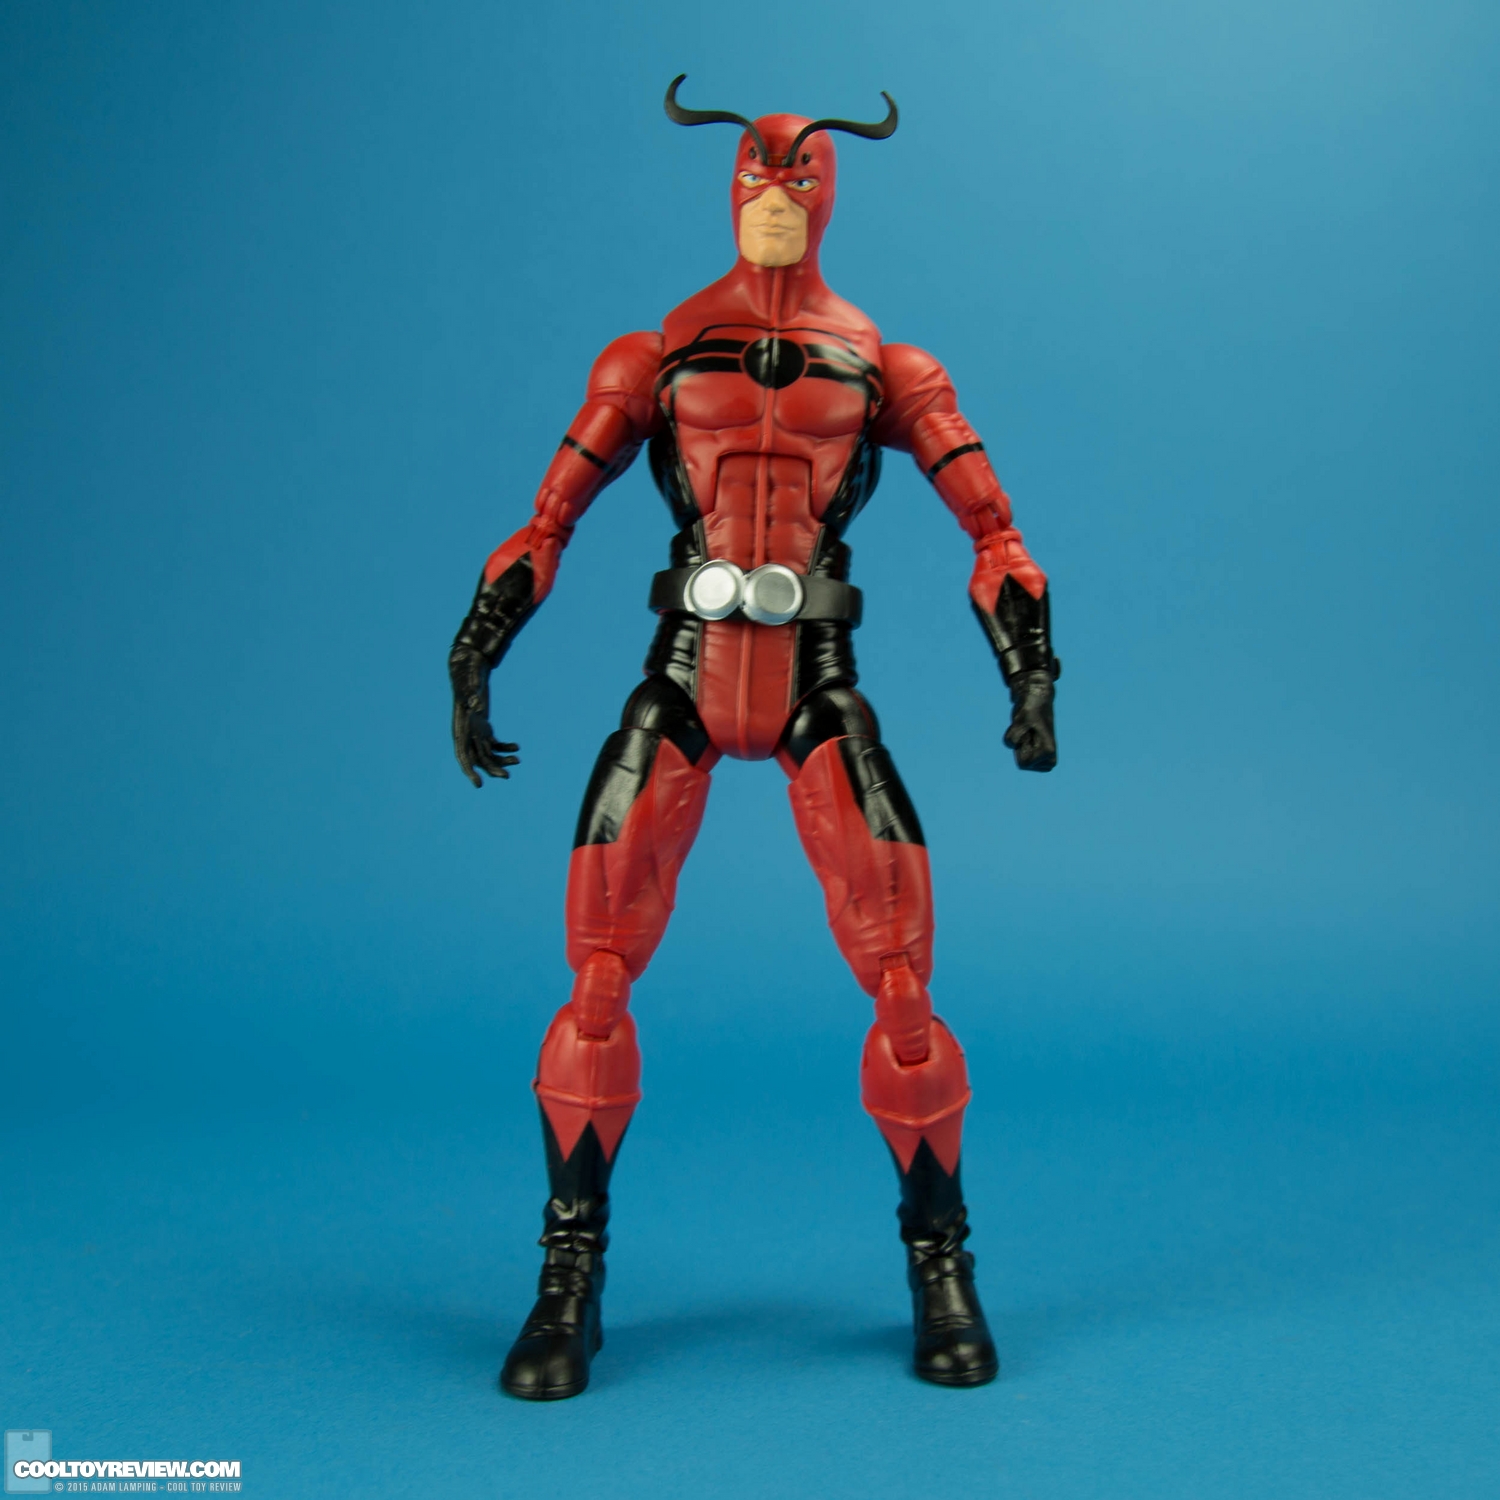 hasbro-deluxe-ant-man-set-san-diego-comic-con-2015-exclusive-001.jpg